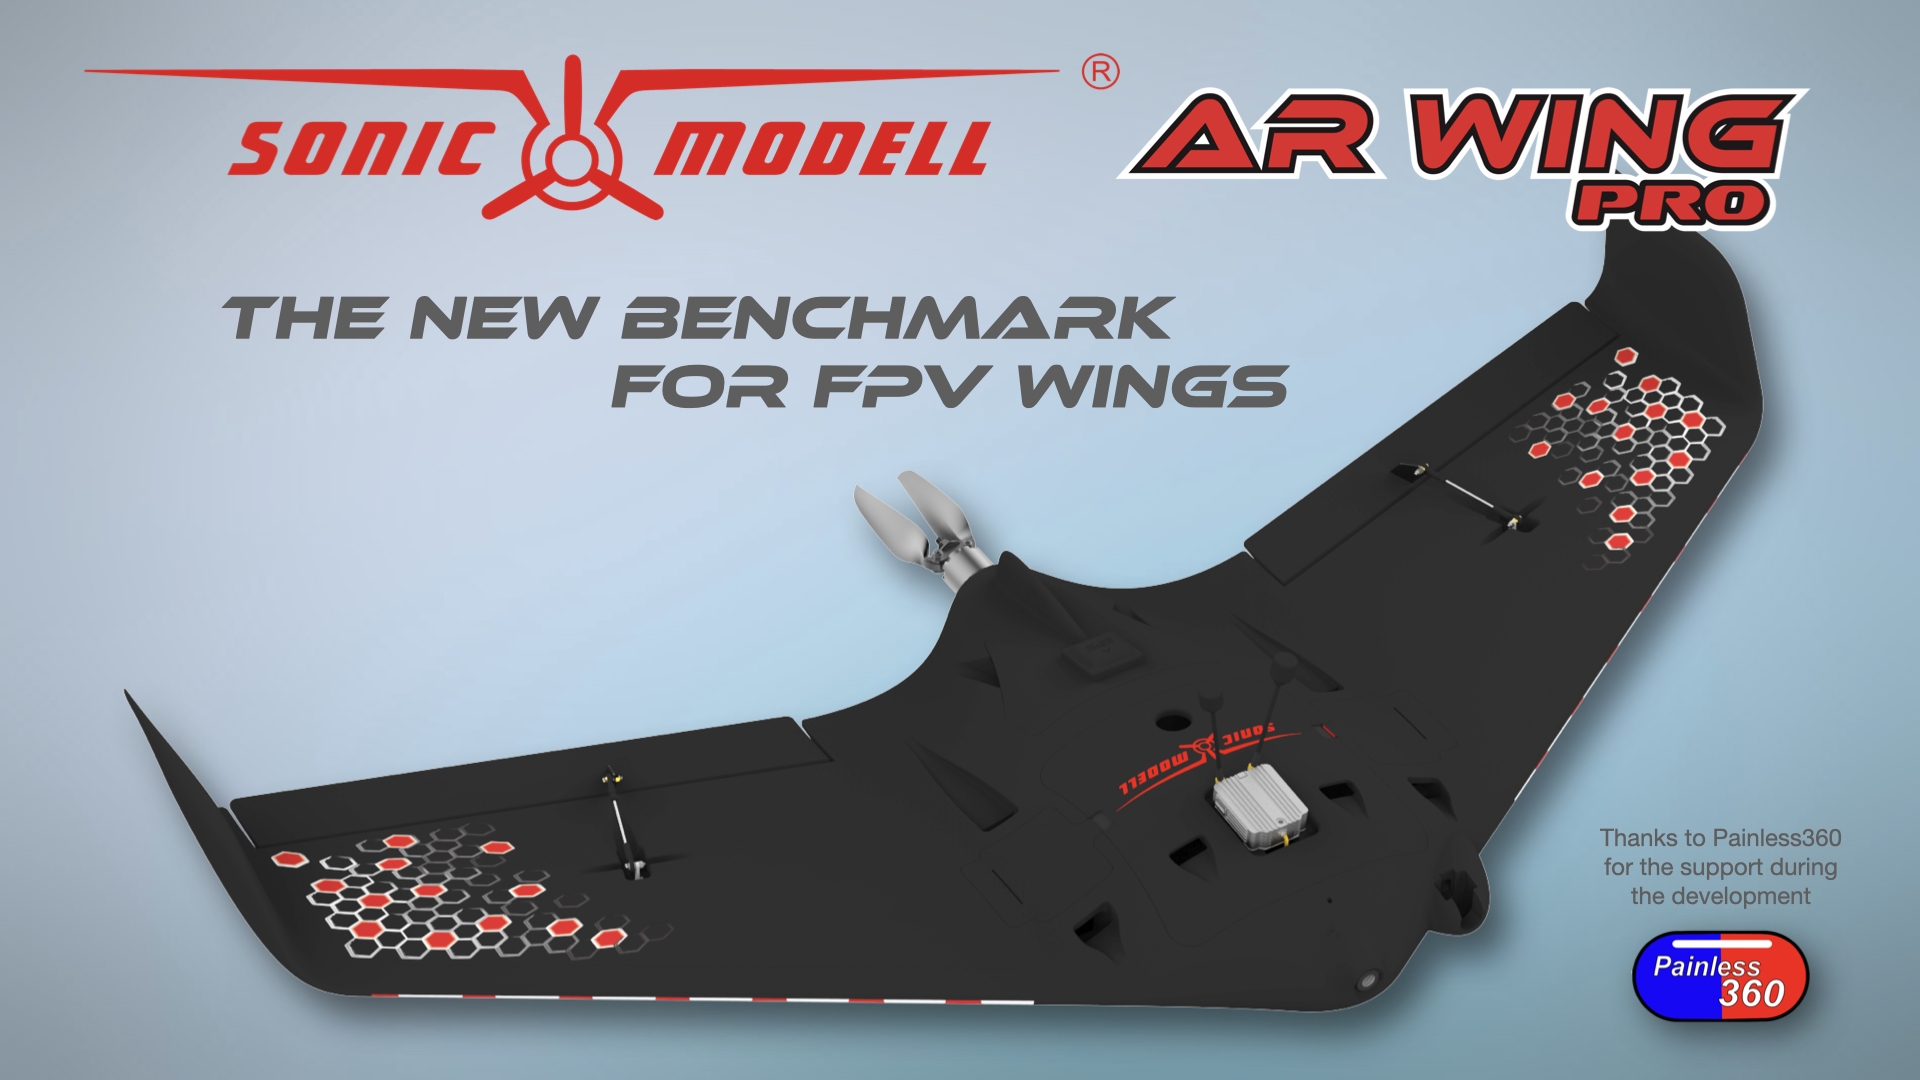 Sonicmodell AR Wing Pro 1000mm Wingspan EPP FPV Flying Wing RC Airplane KIT/PNP - PNP